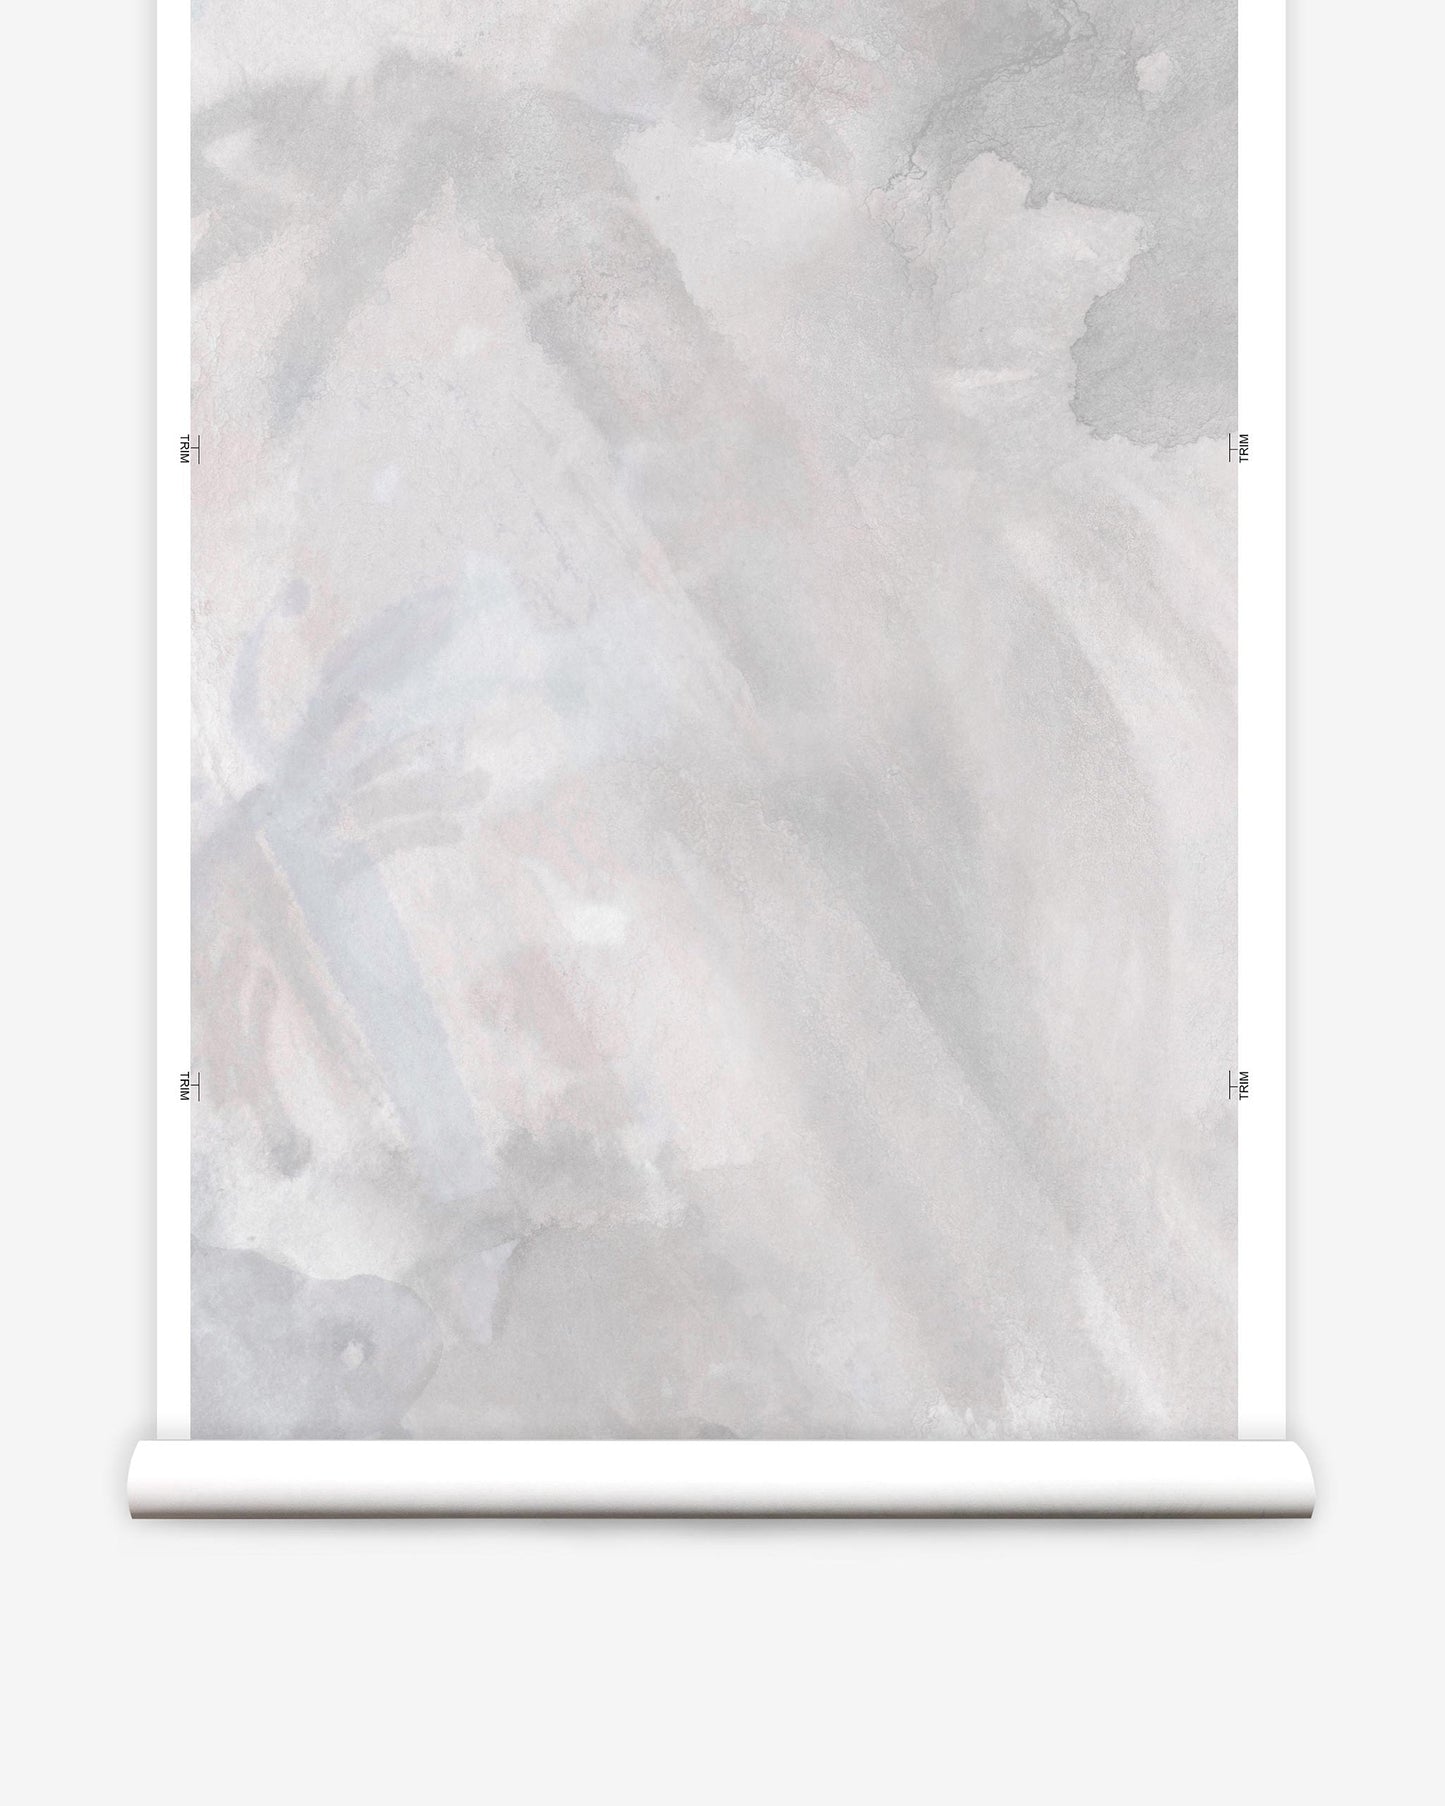 A Reflettere Wallpaper Mural||Alba on a white background.